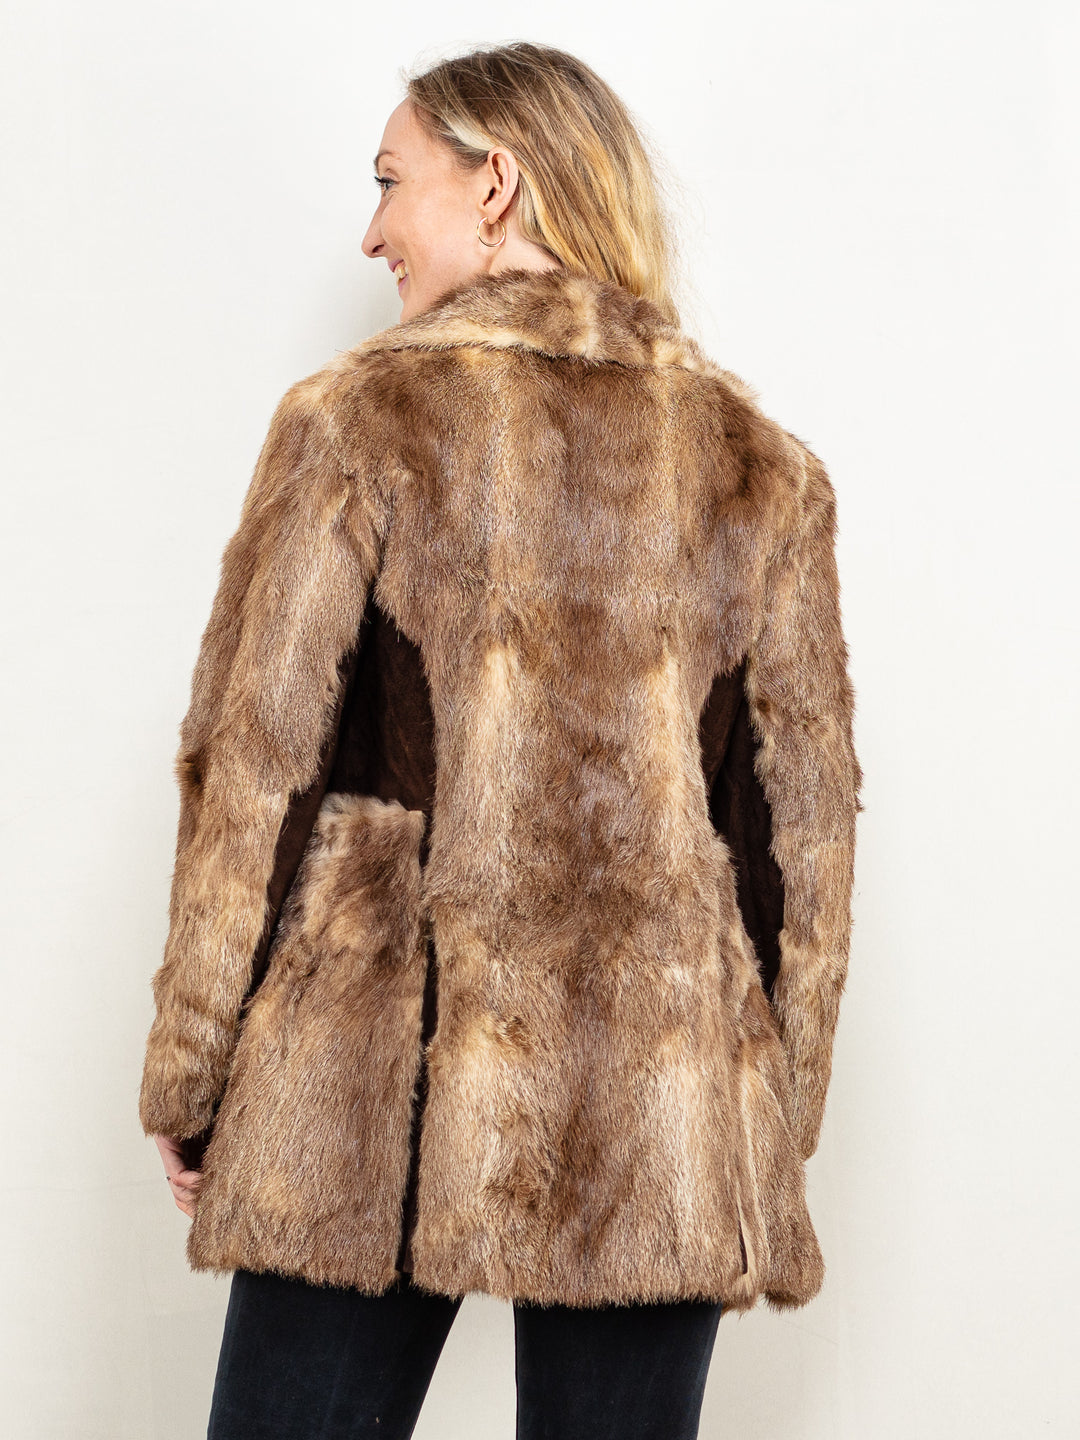 Fur Coat Women vintage 70's brown fur and suede coat johnssons short coat fancy luxurious opera coat size medium